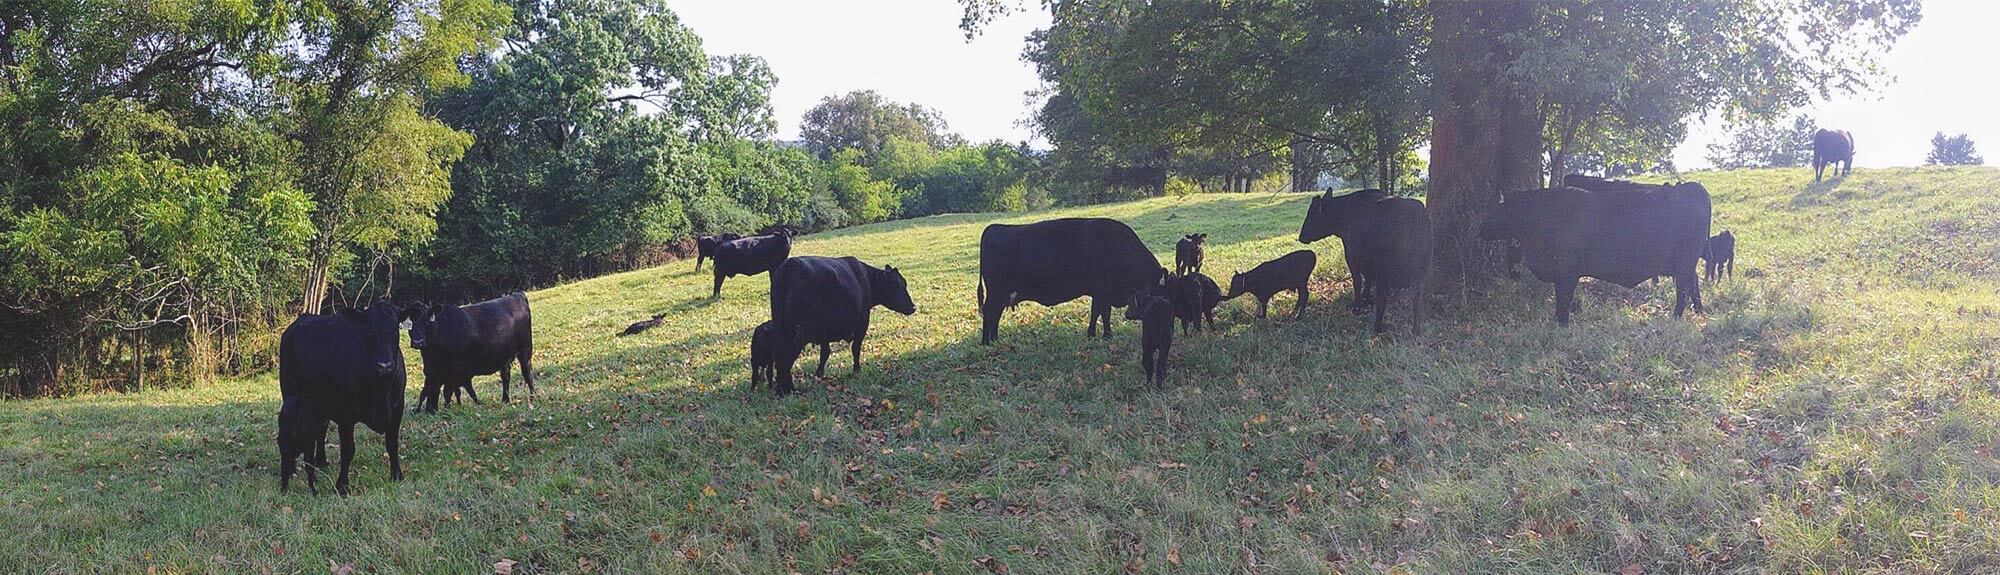 Cedar Ridge Angus Cattle in a field